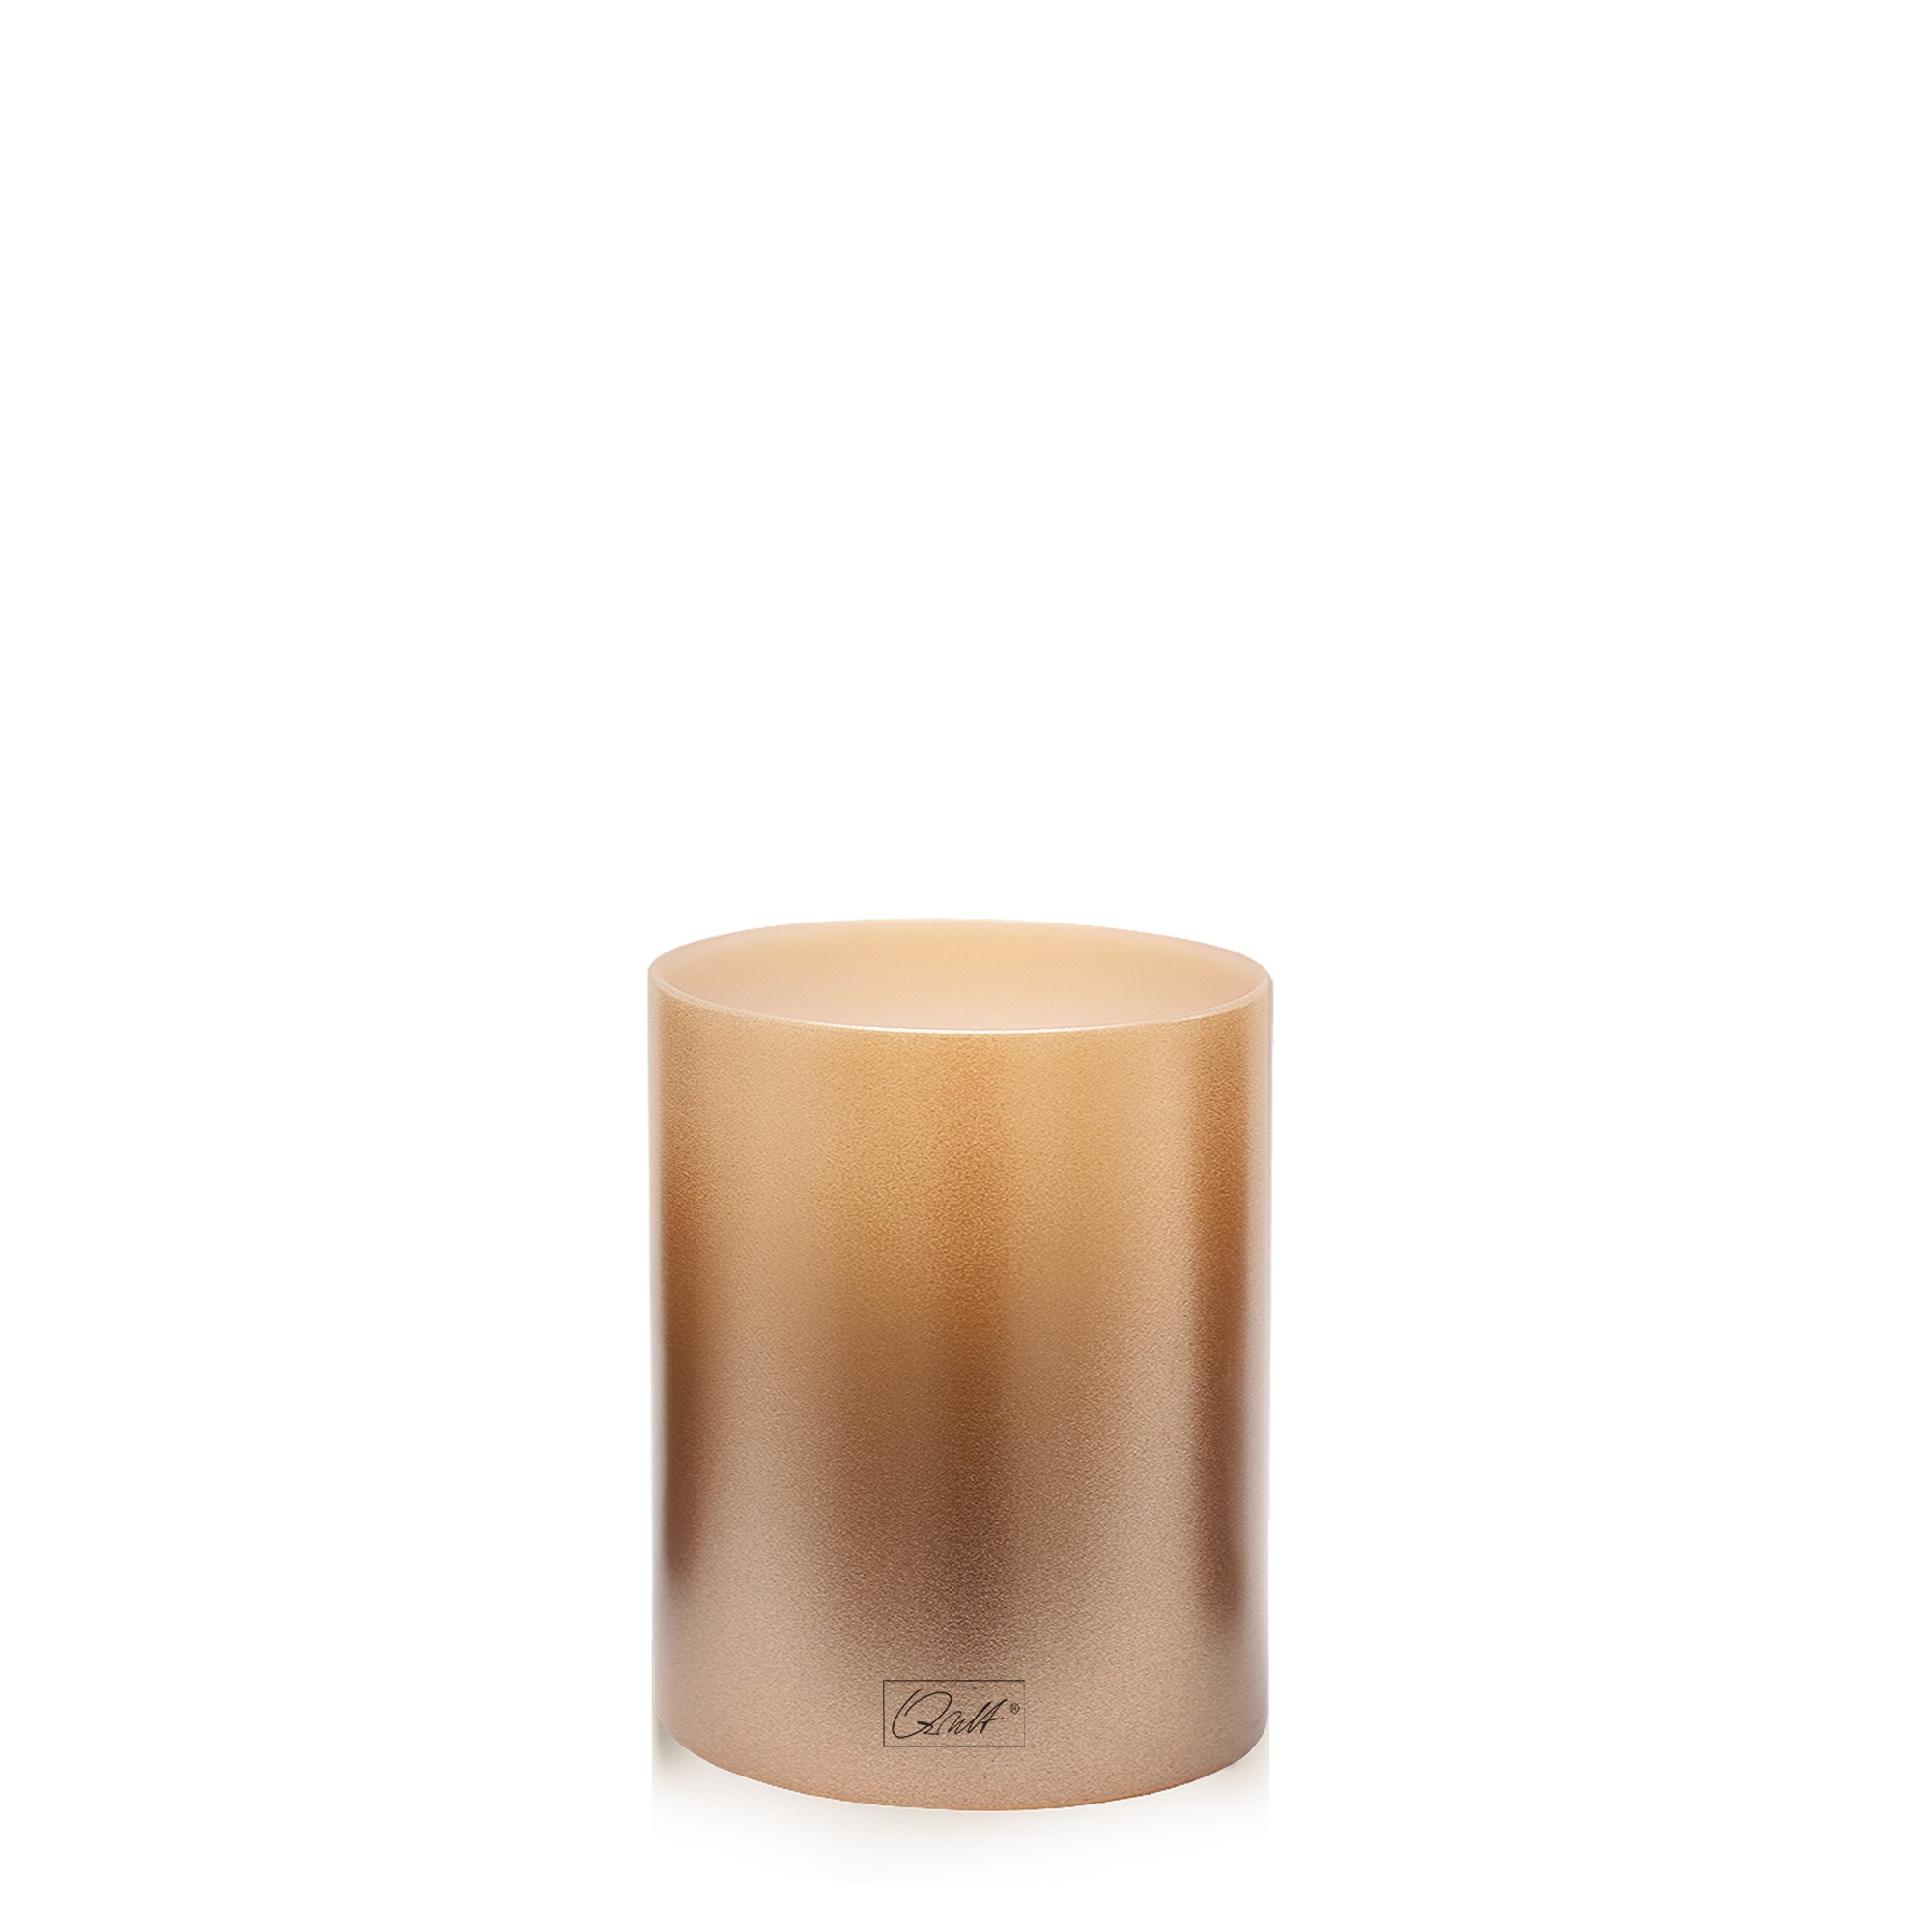 Qult Farluce Inside Metallic  - Tealight Candle Holder  - Copper